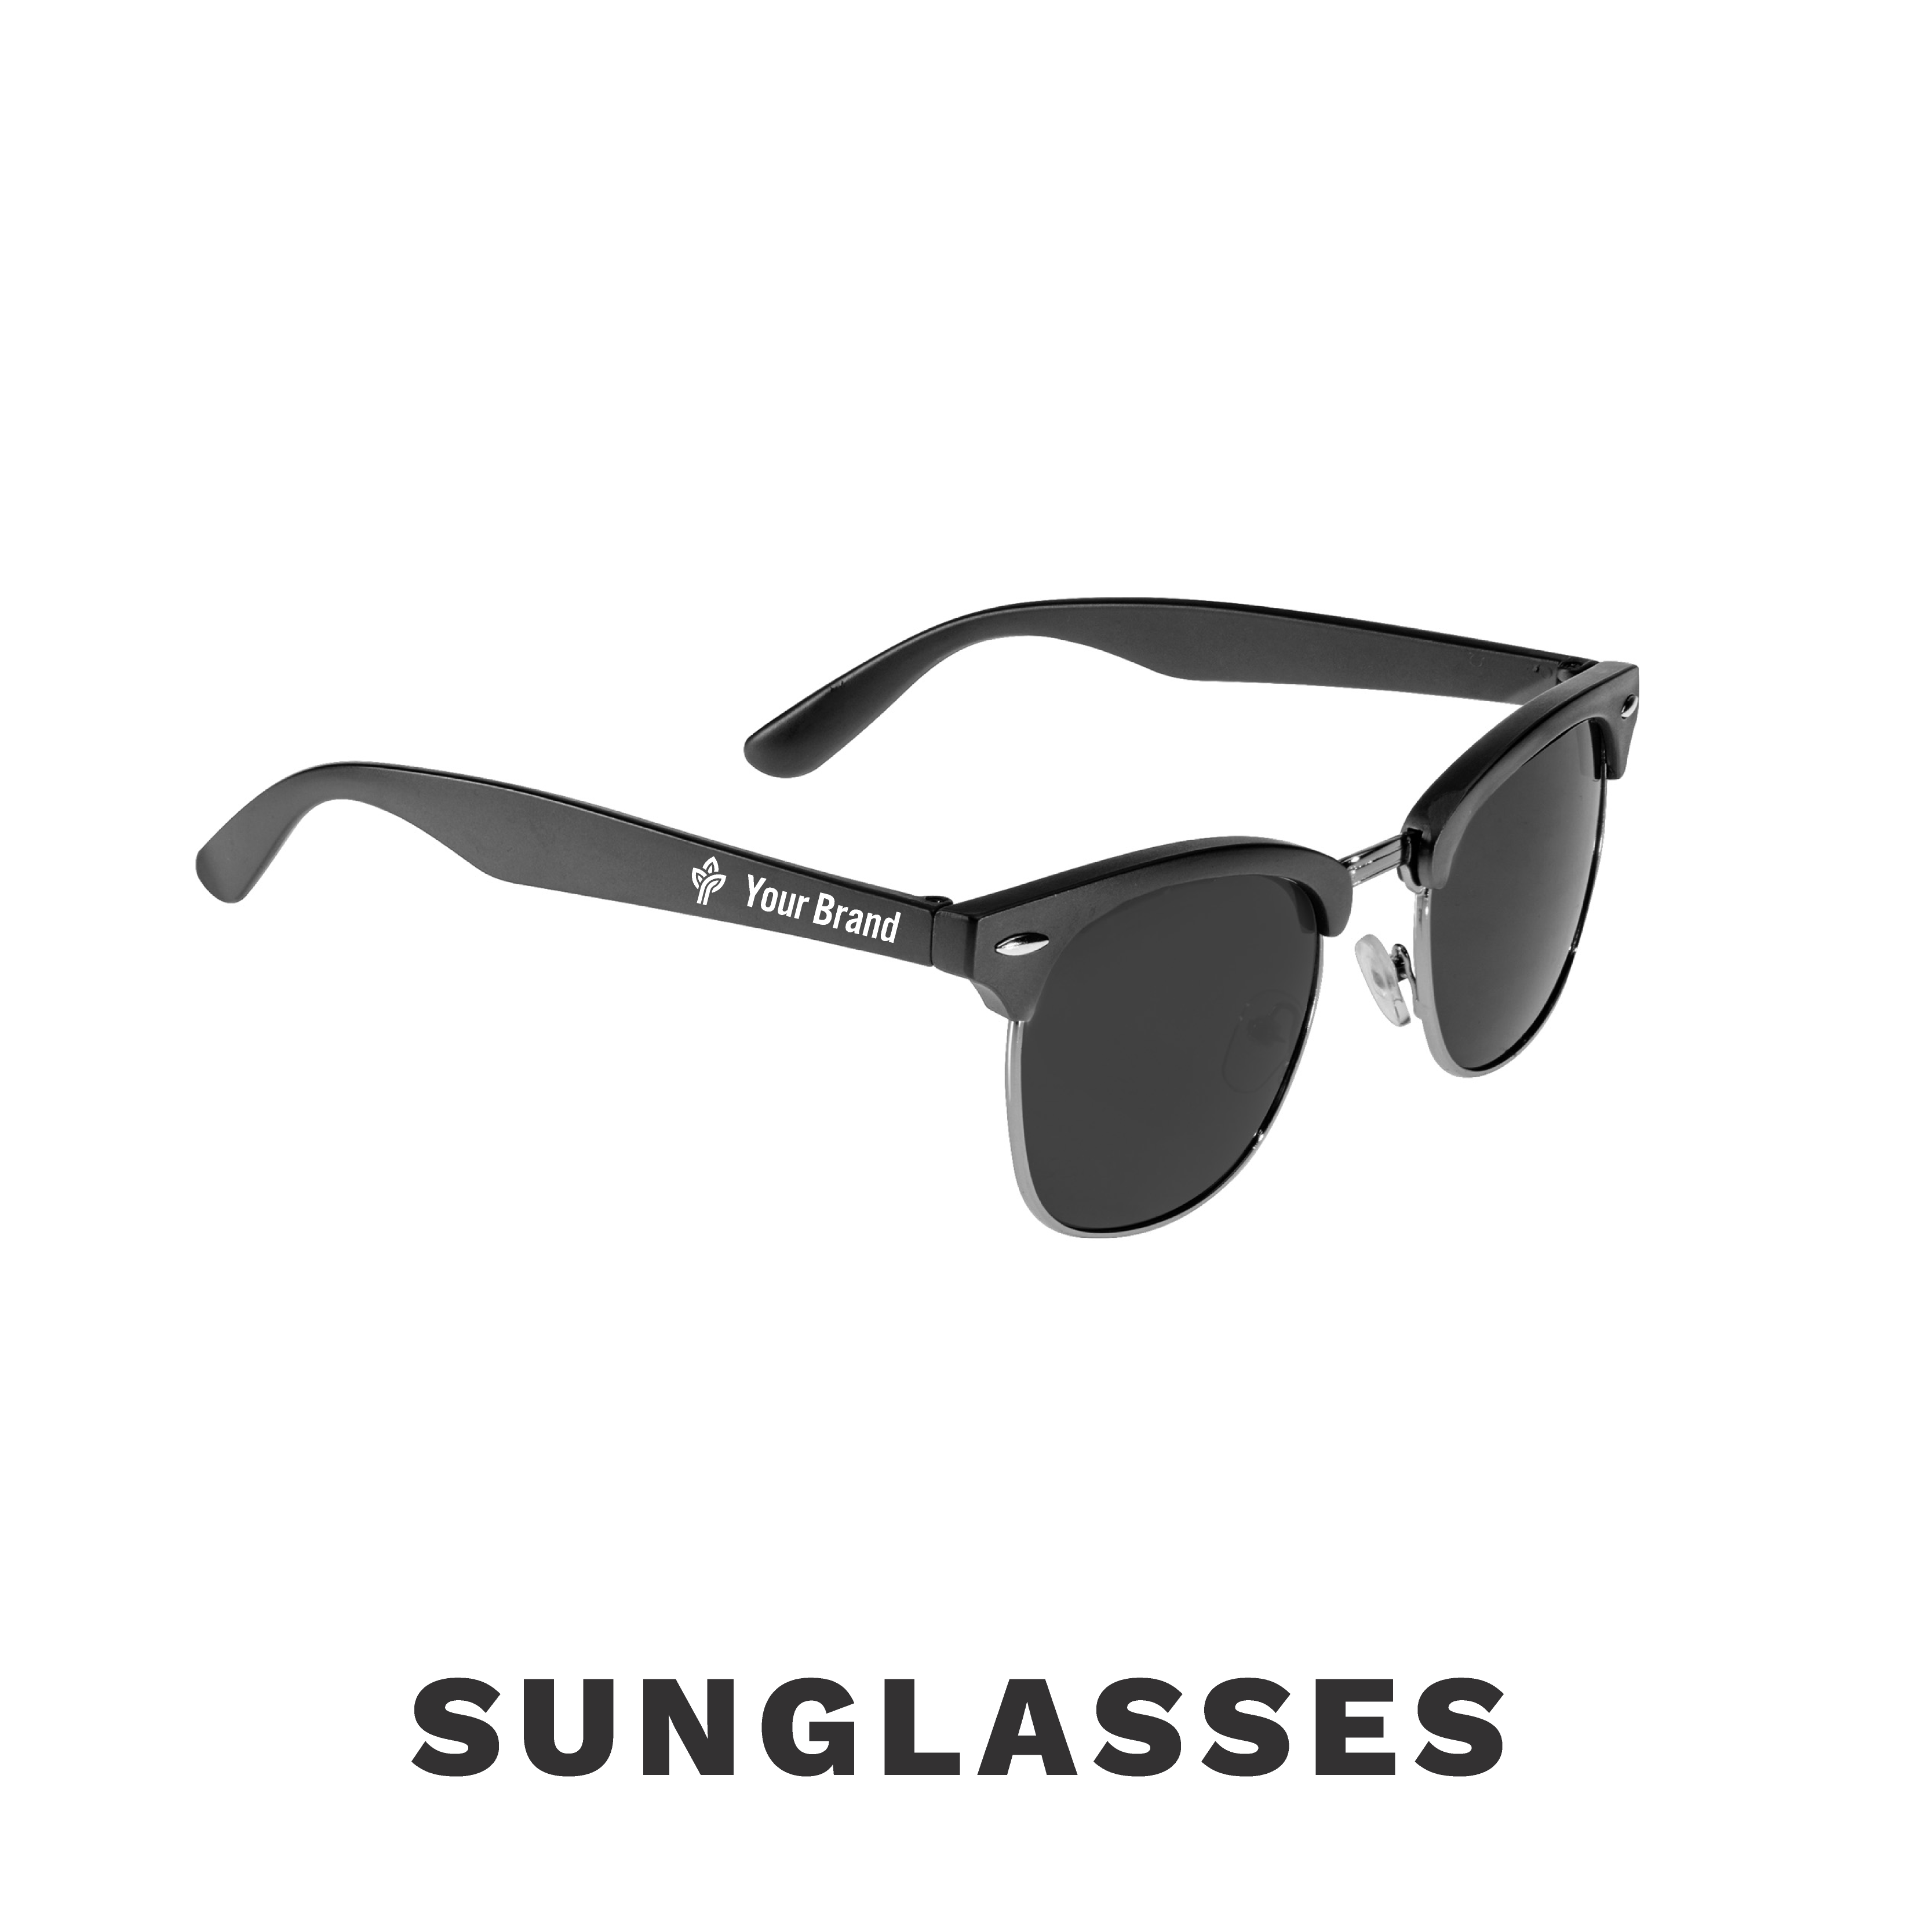 Promotional sunglasses